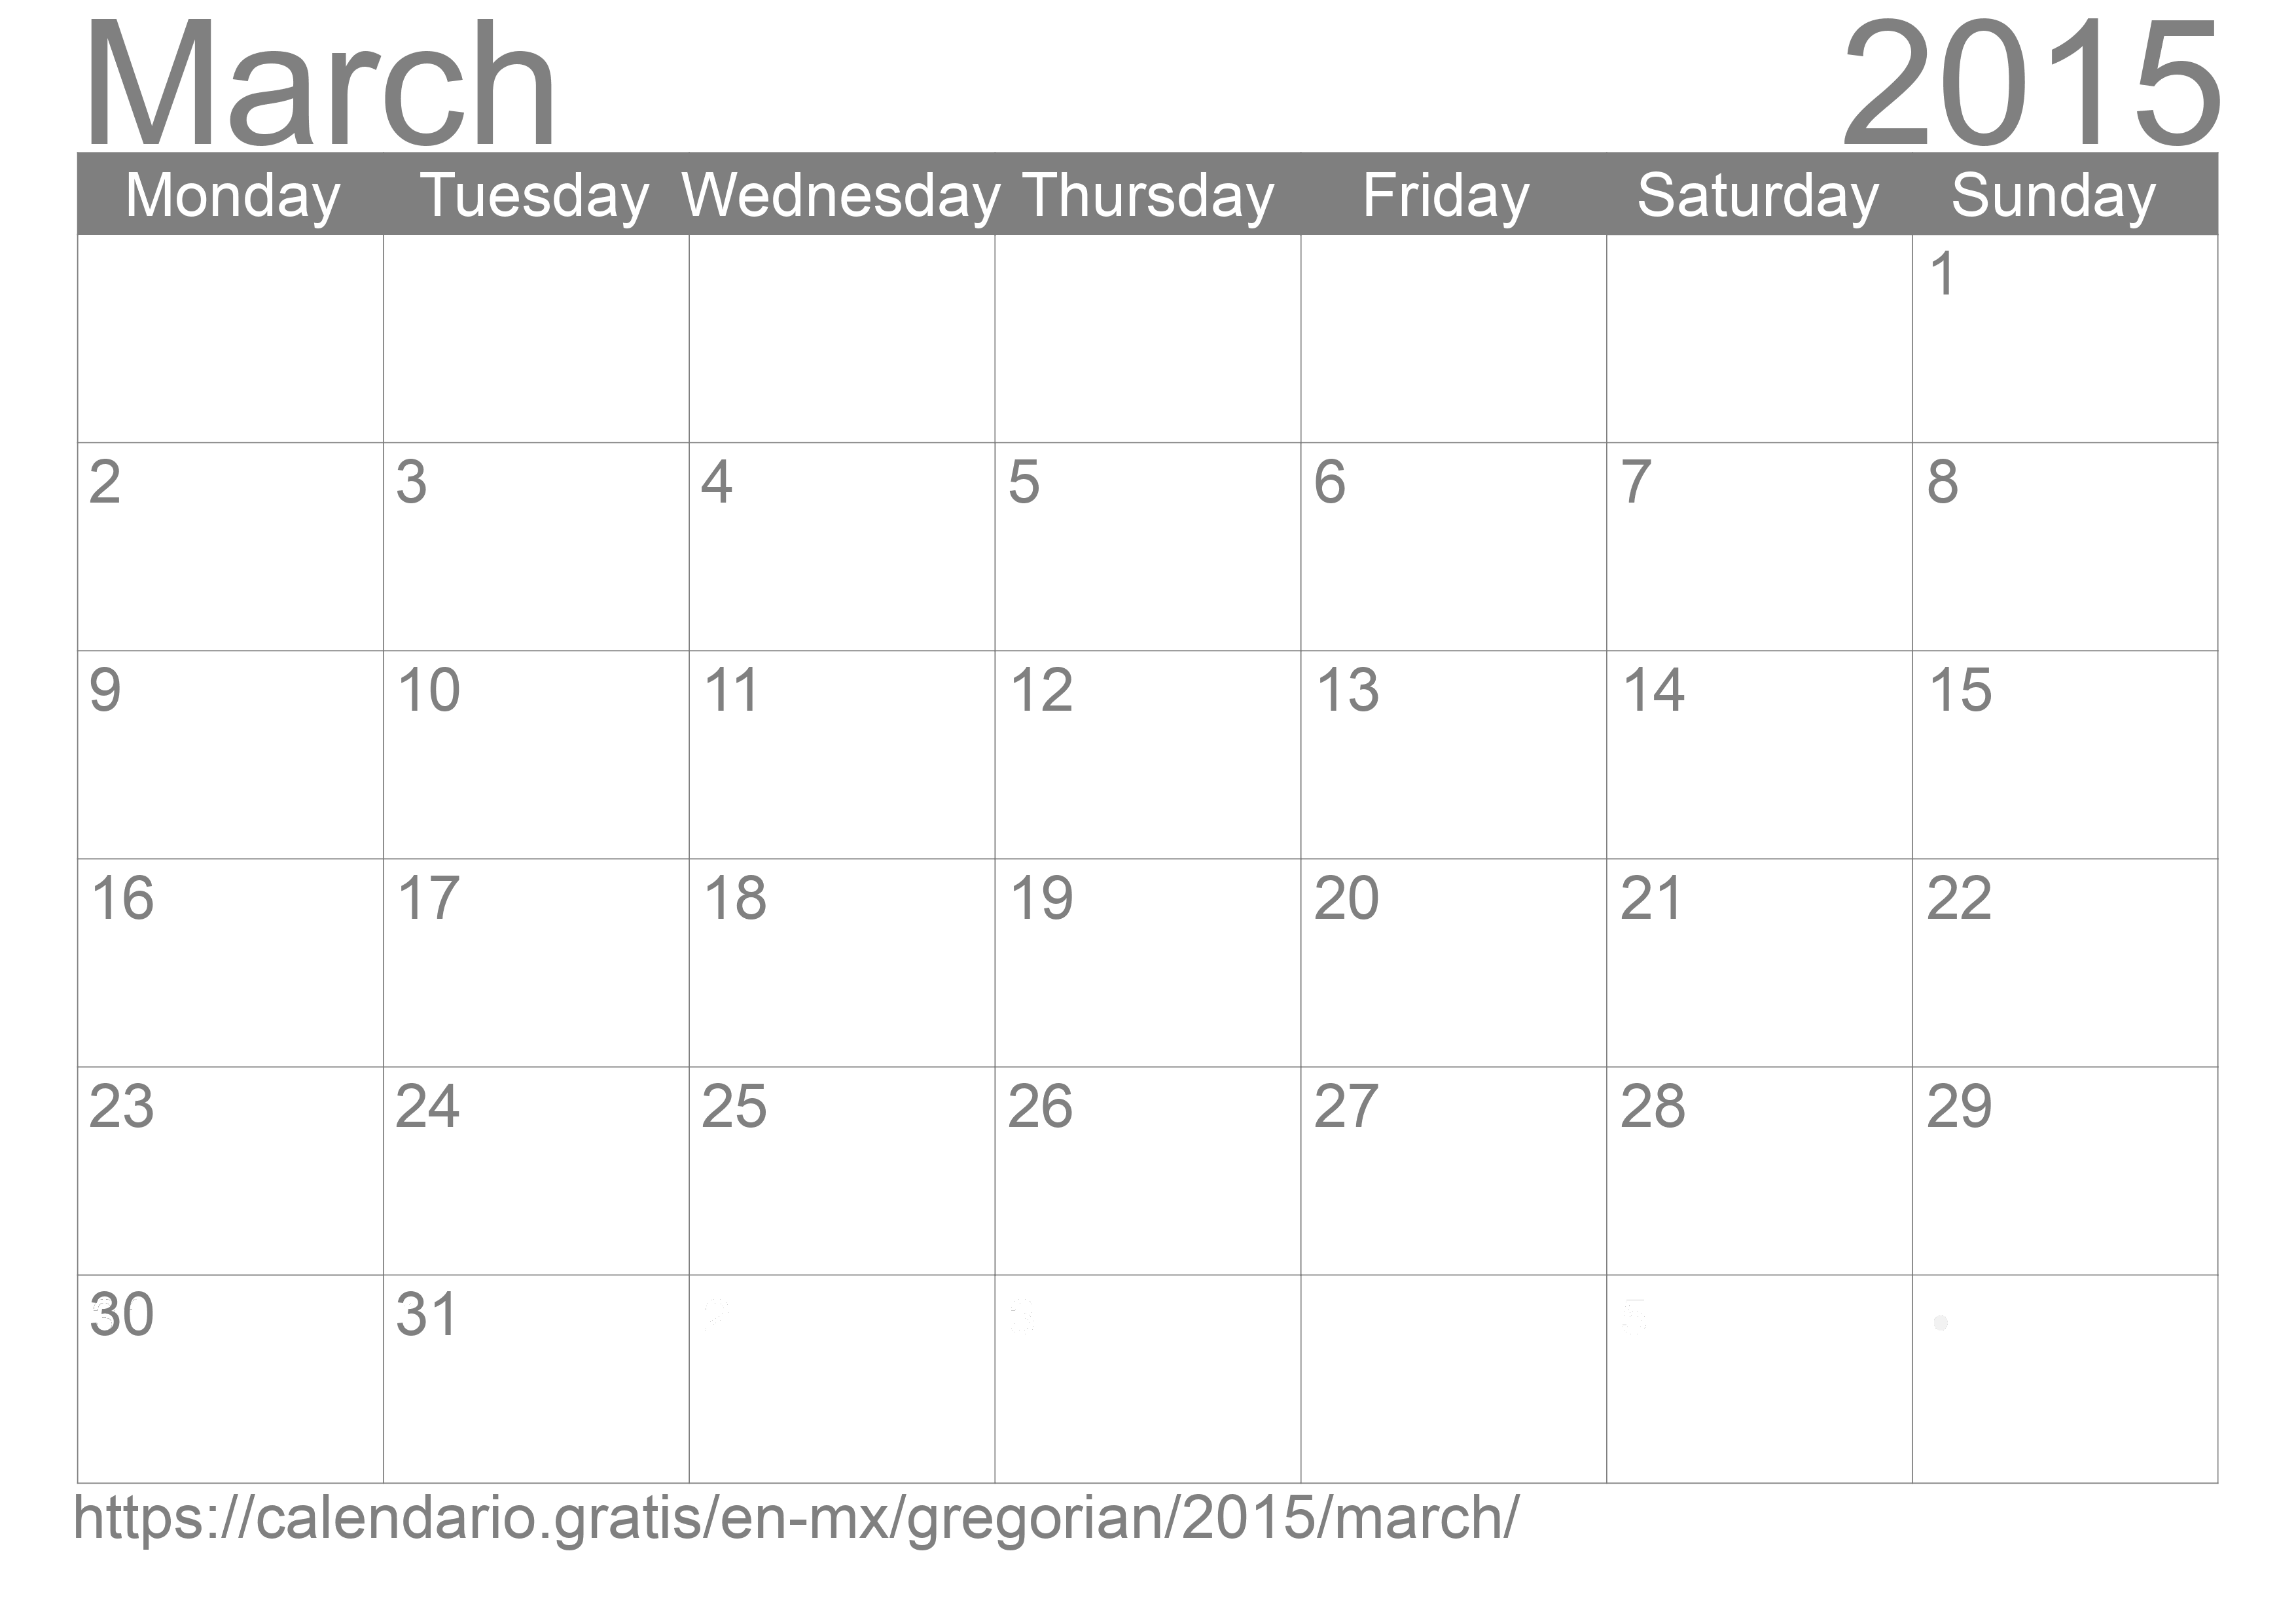 Calendar March 2015 to print